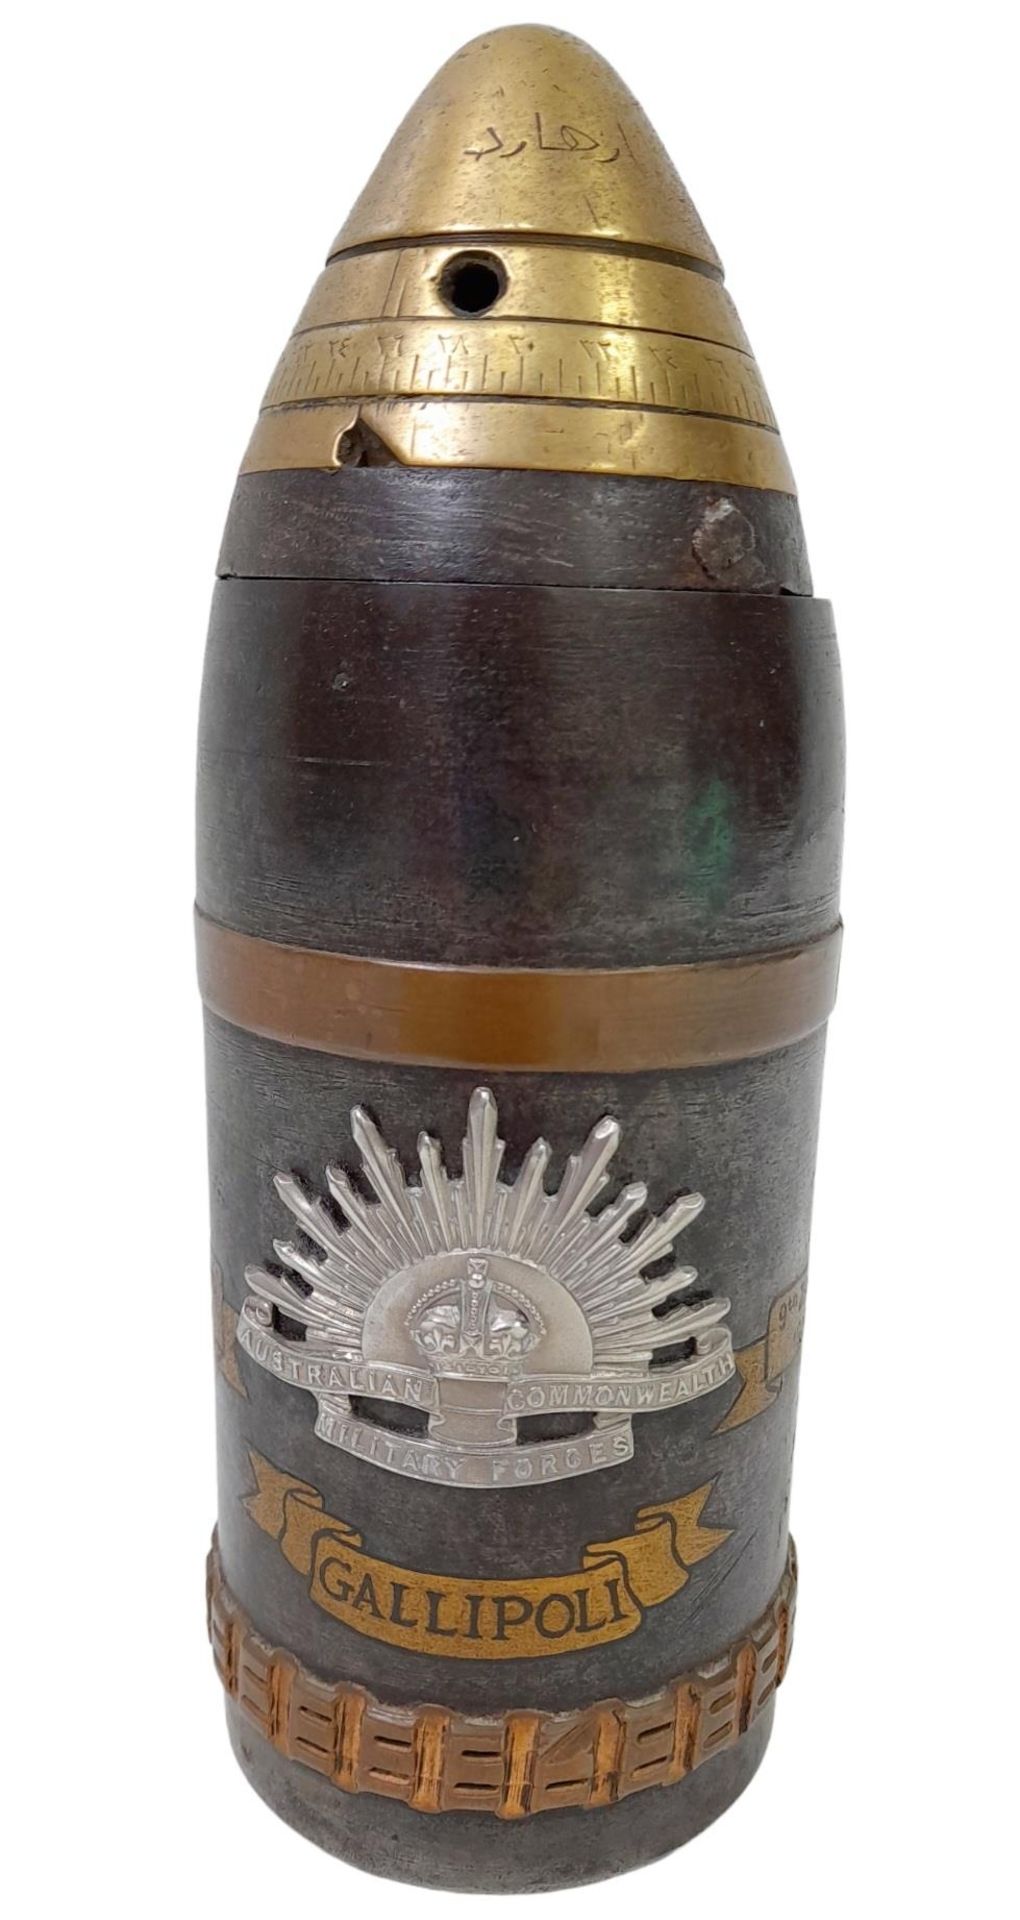 Inert WW1 Ottoman (Turkish) 75mm shrapnel shell projectile Gallipoli Memento. Silver Australian